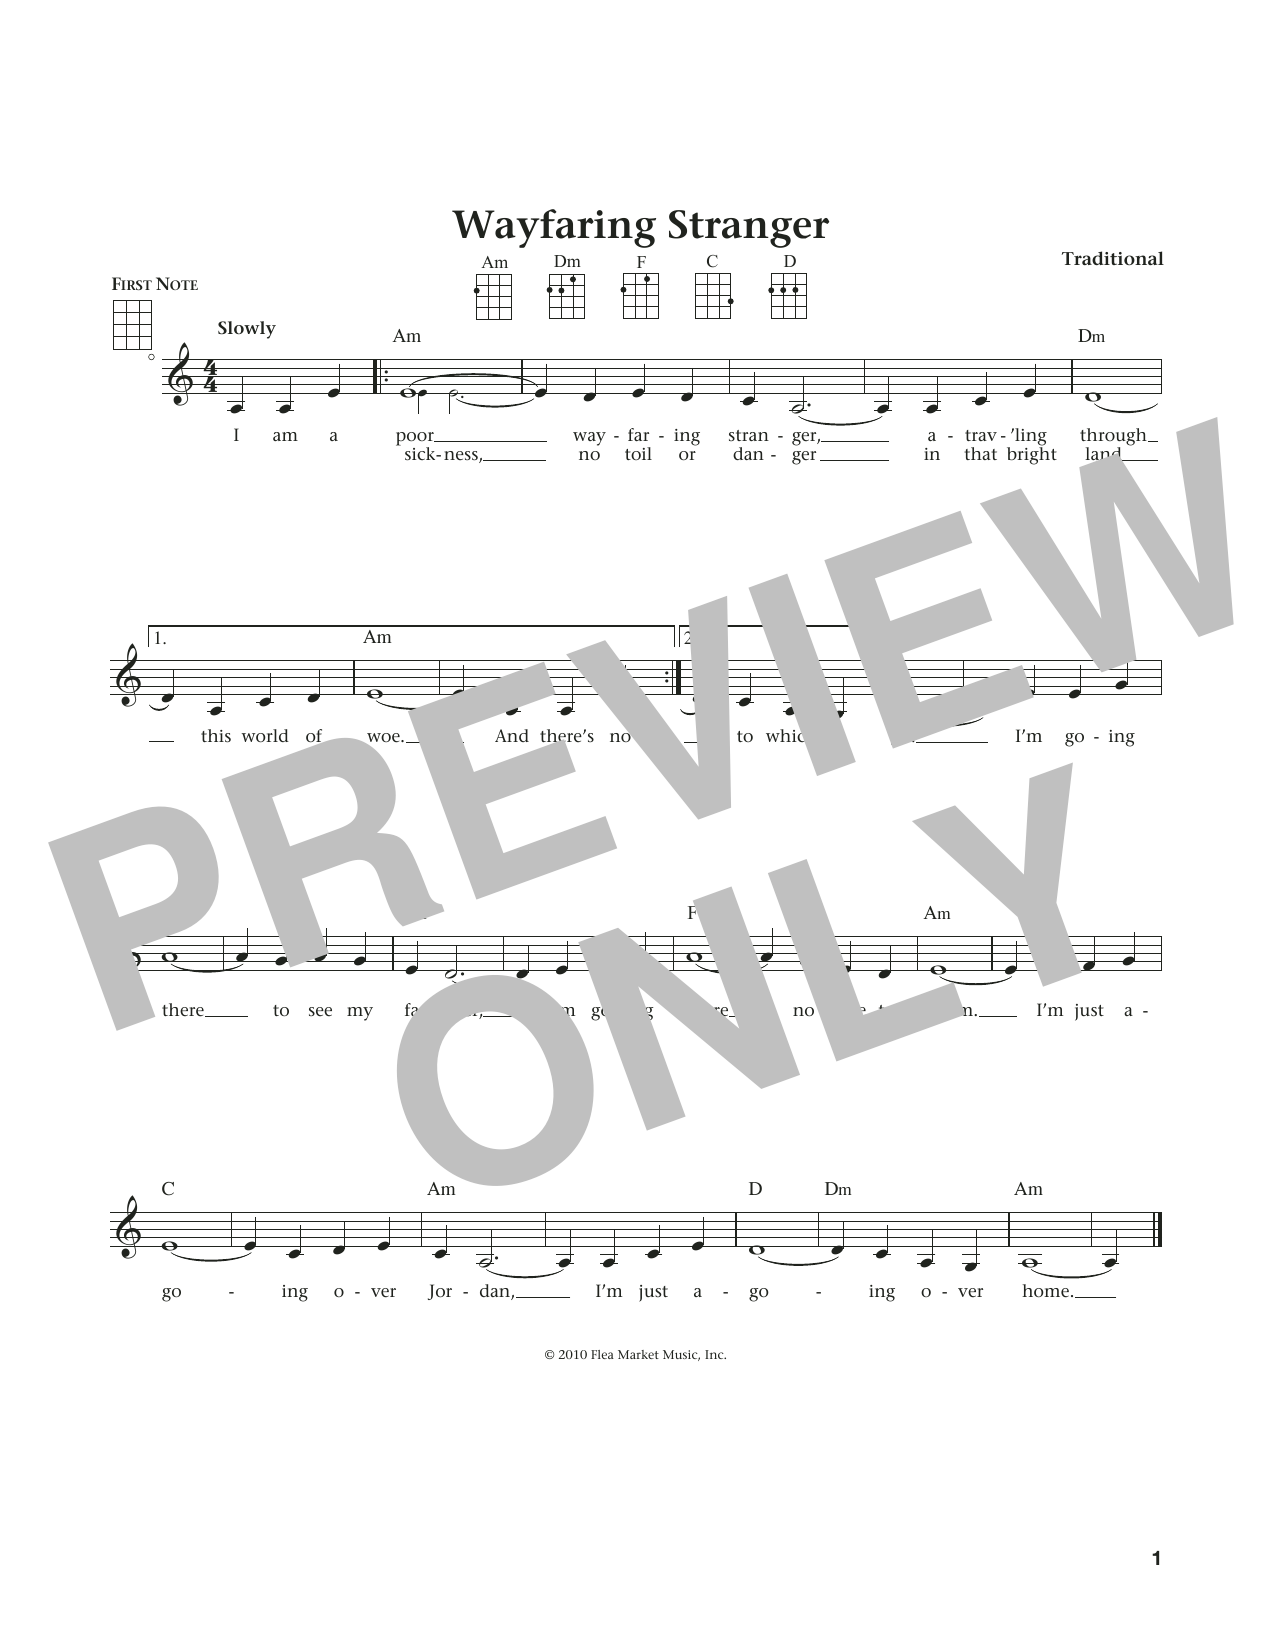 Download Southern American Folk Hymn Wayfaring Stranger Sheet Music and learn how to play Ukulele PDF digital score in minutes